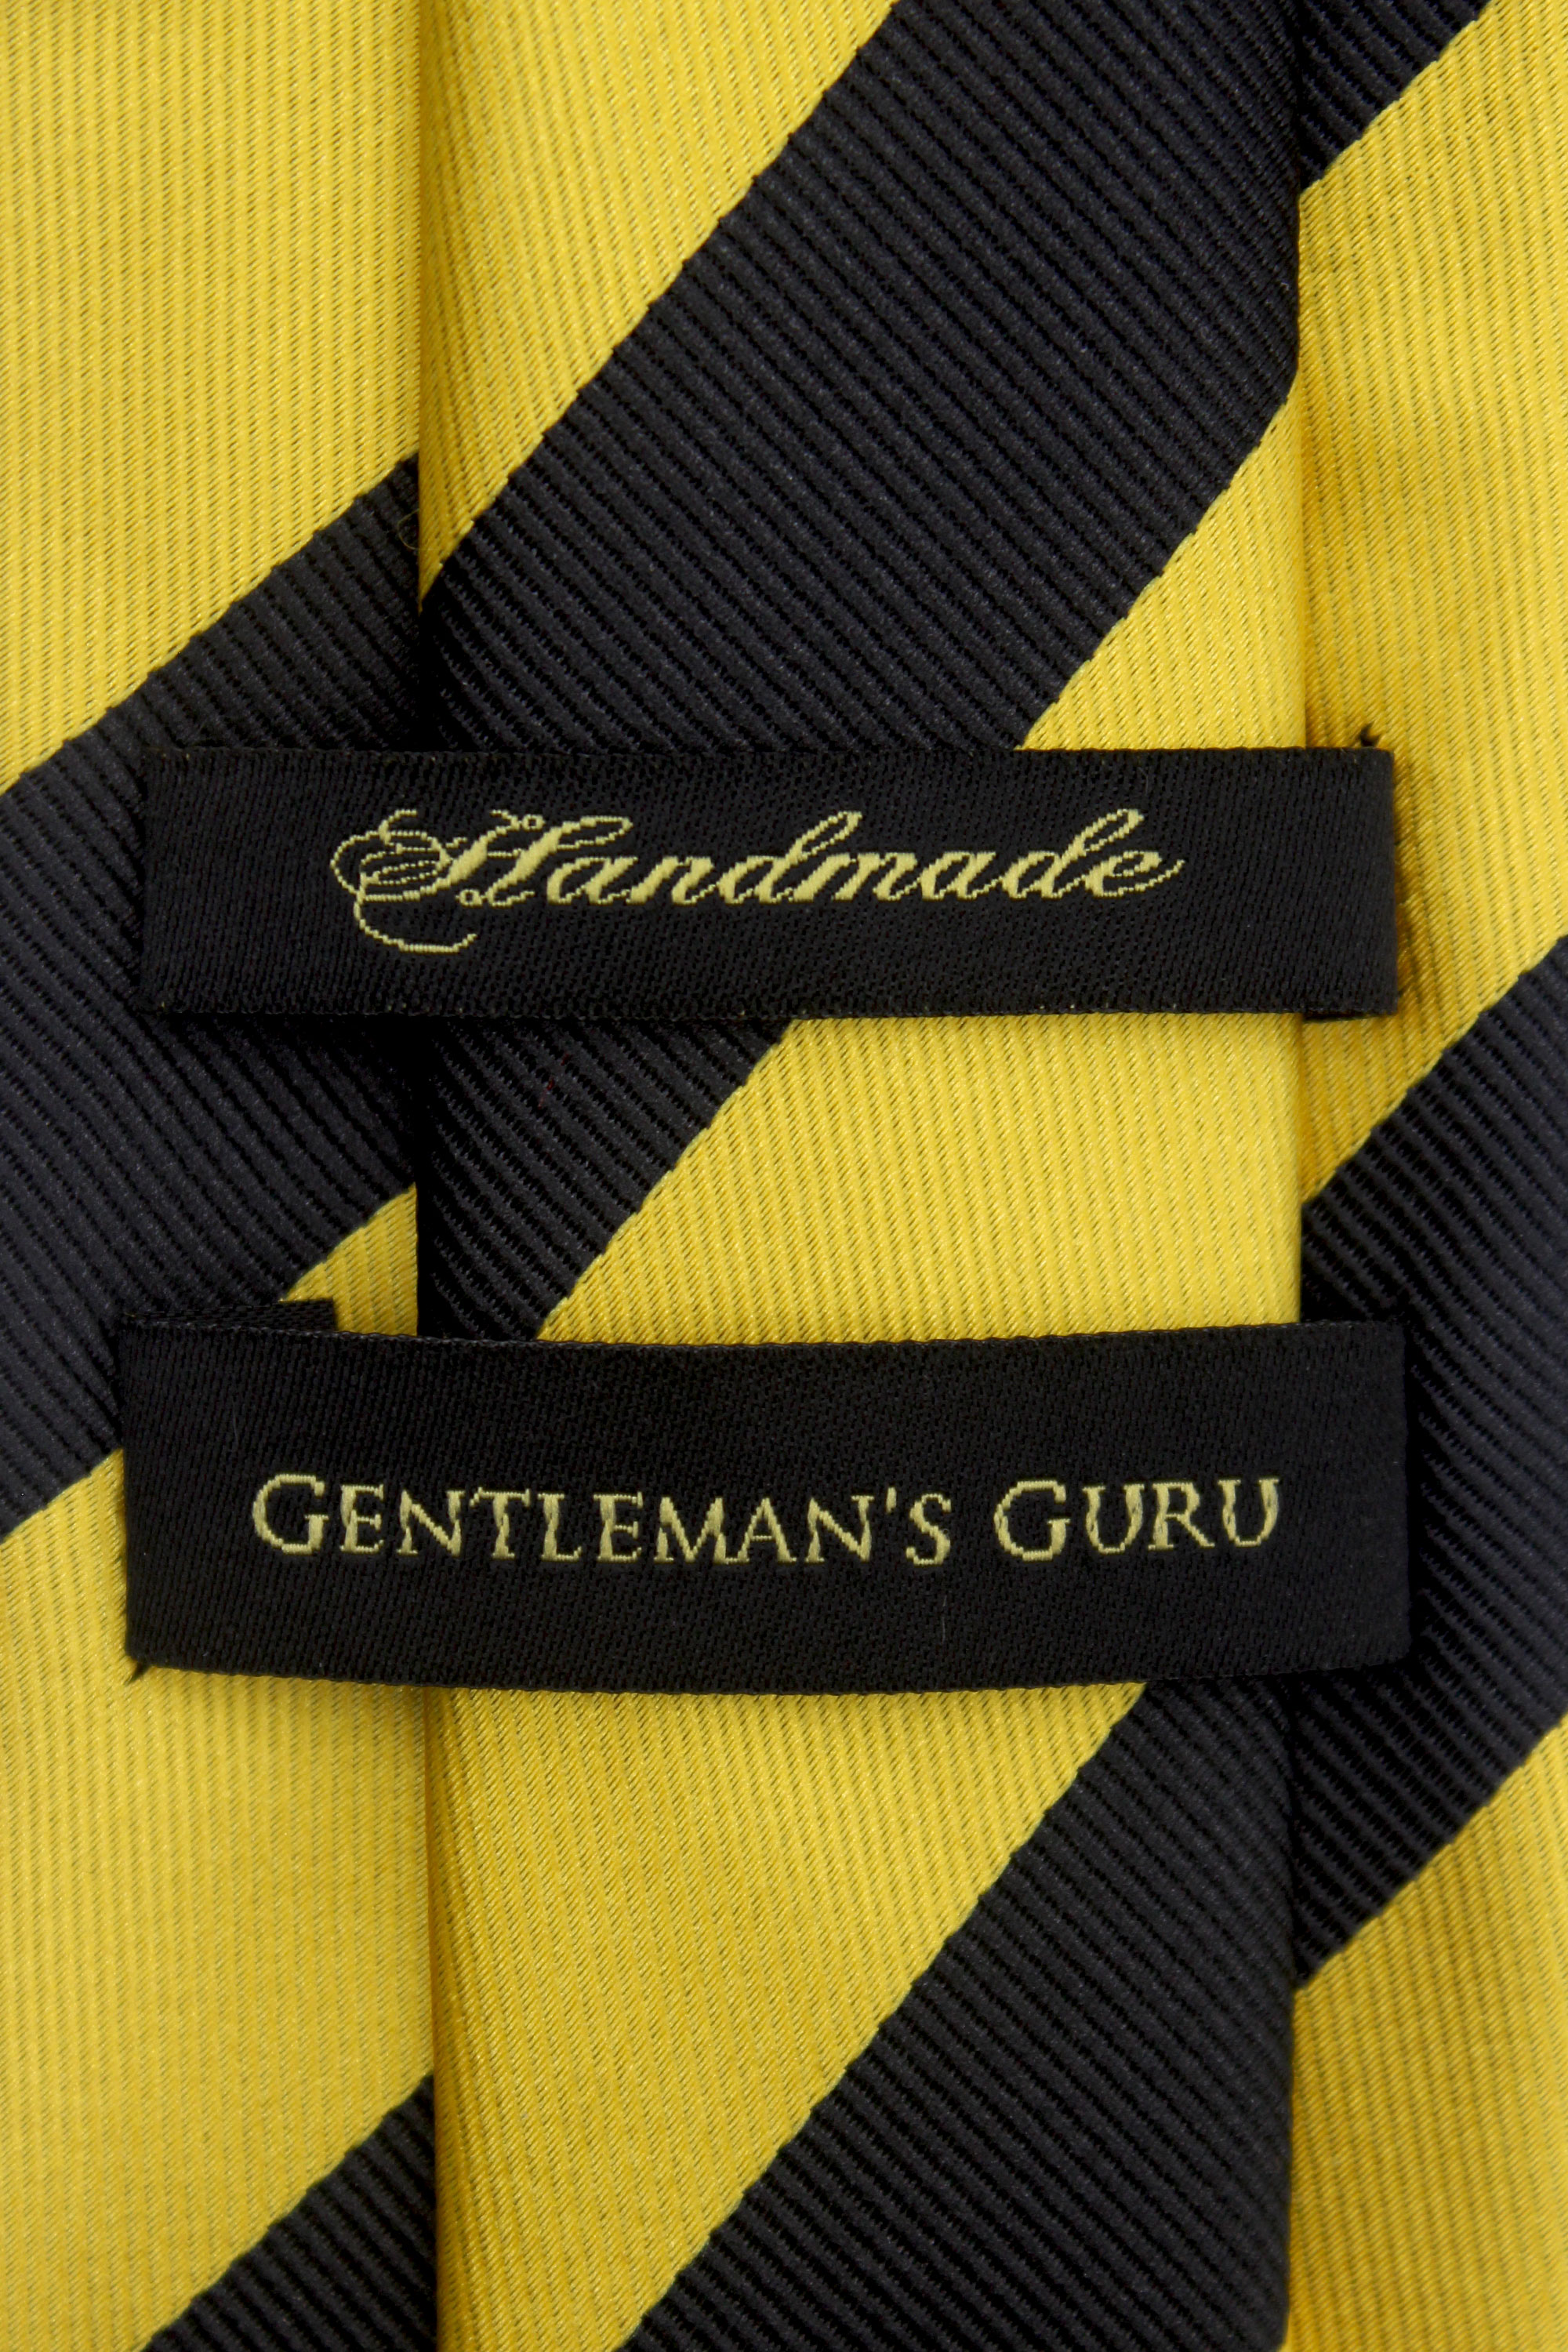 Black-and-Gold-Striped-Branded-Tie-from-Gentlemansguru.com